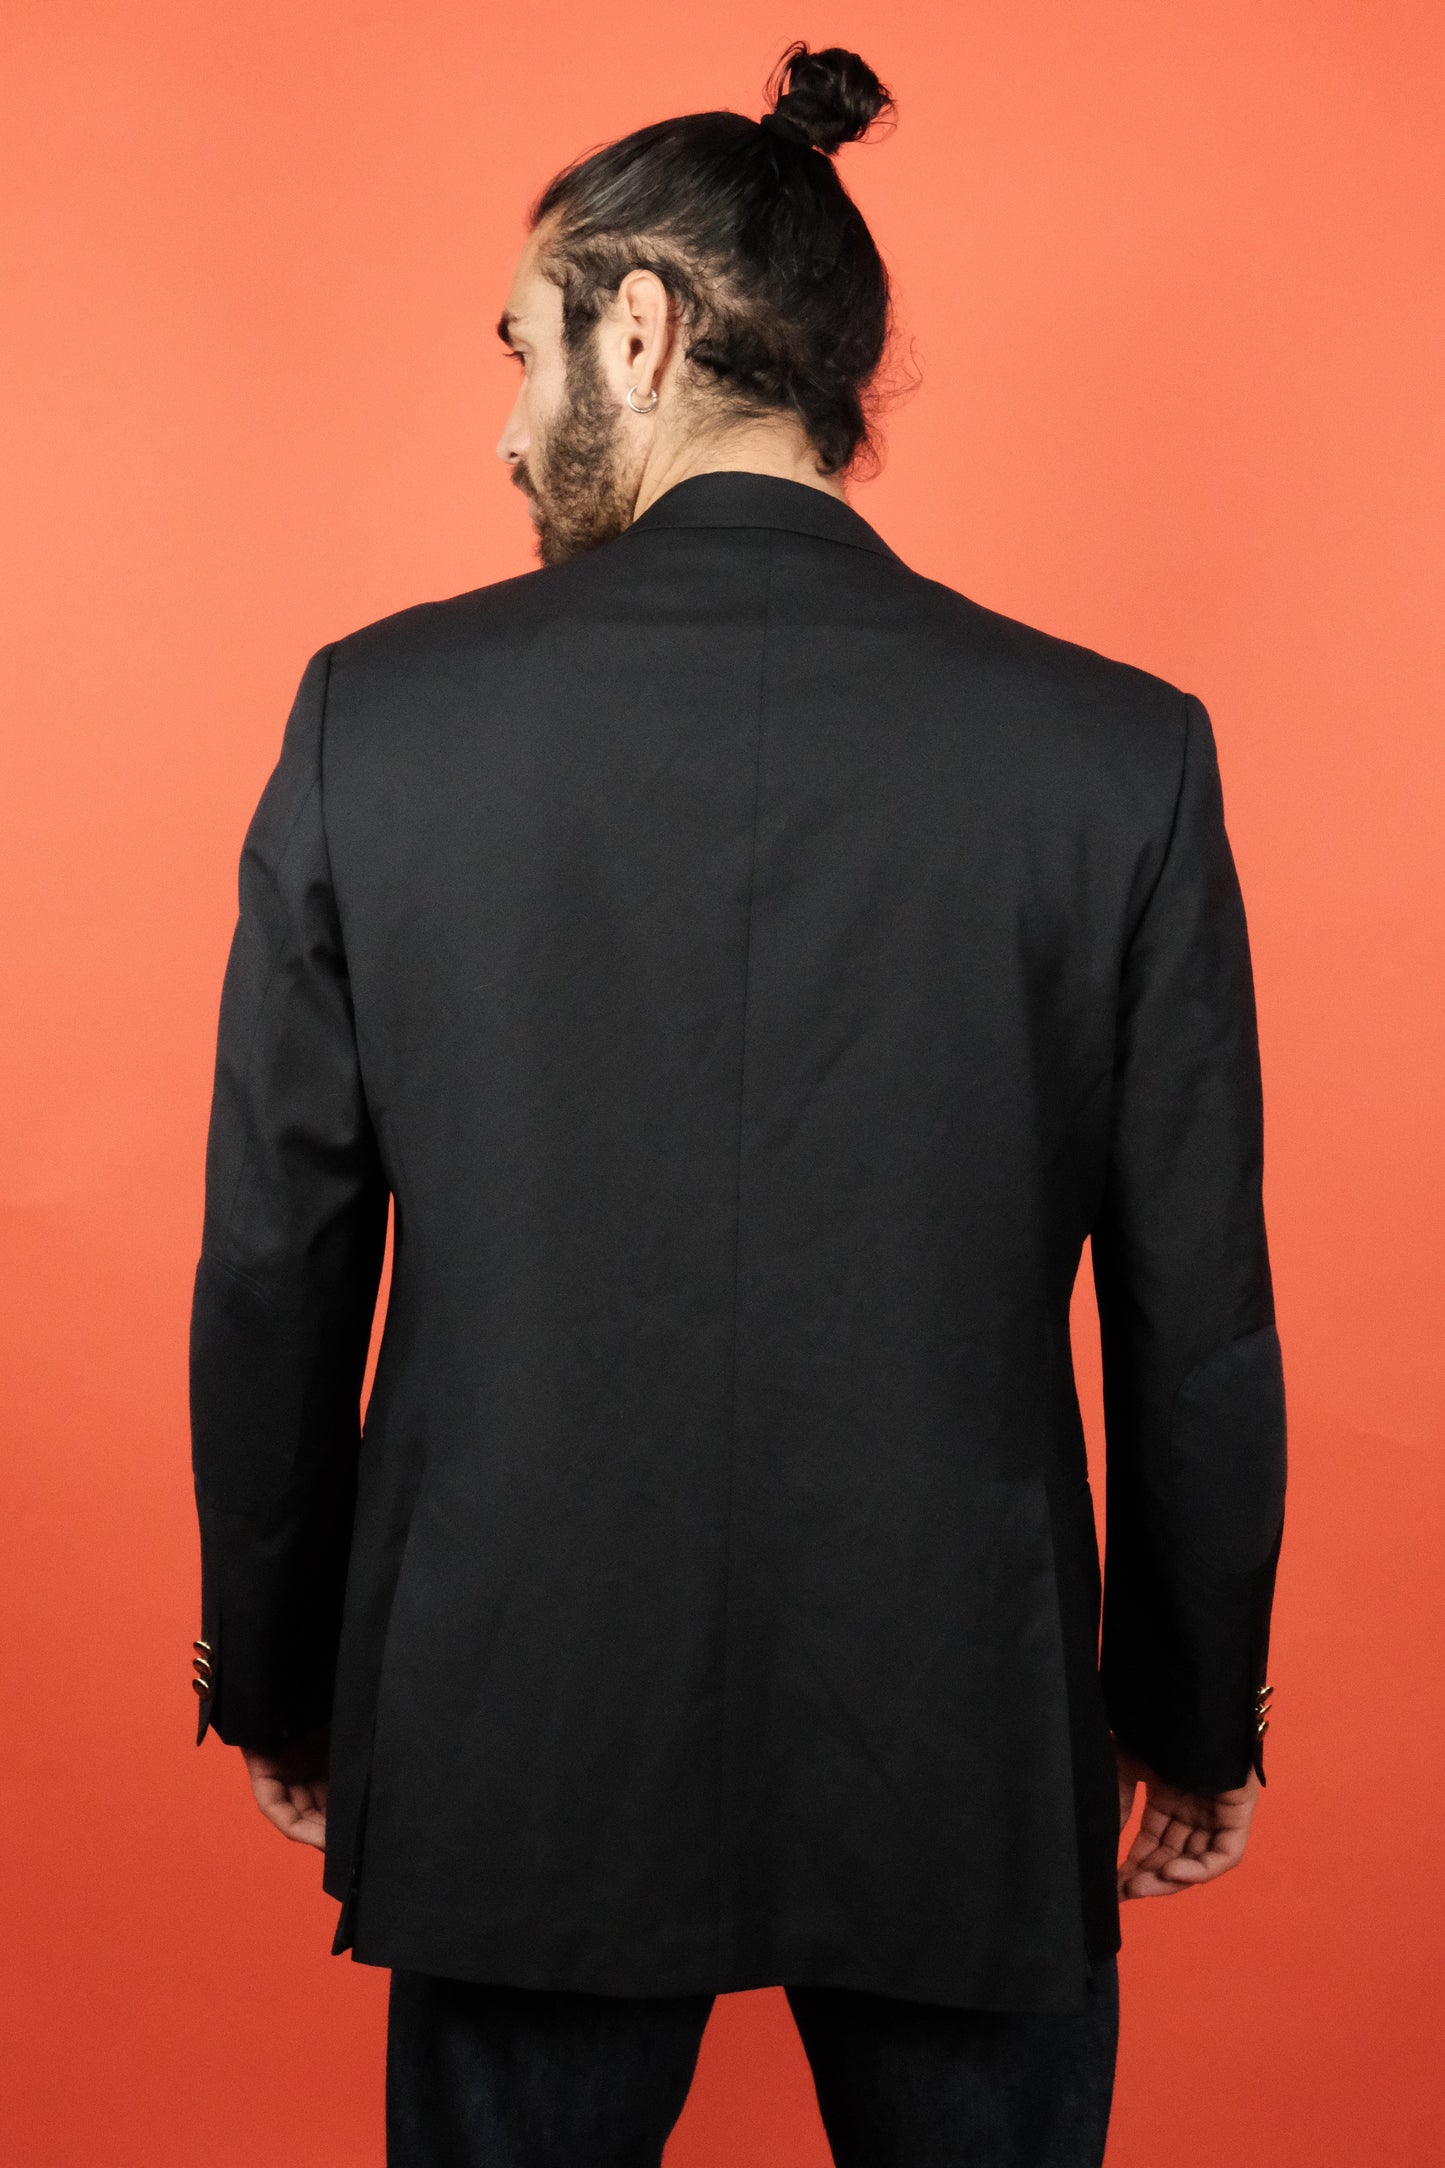 Burberry Double Breast Suit Jacket - vintage clothing clochard92.com